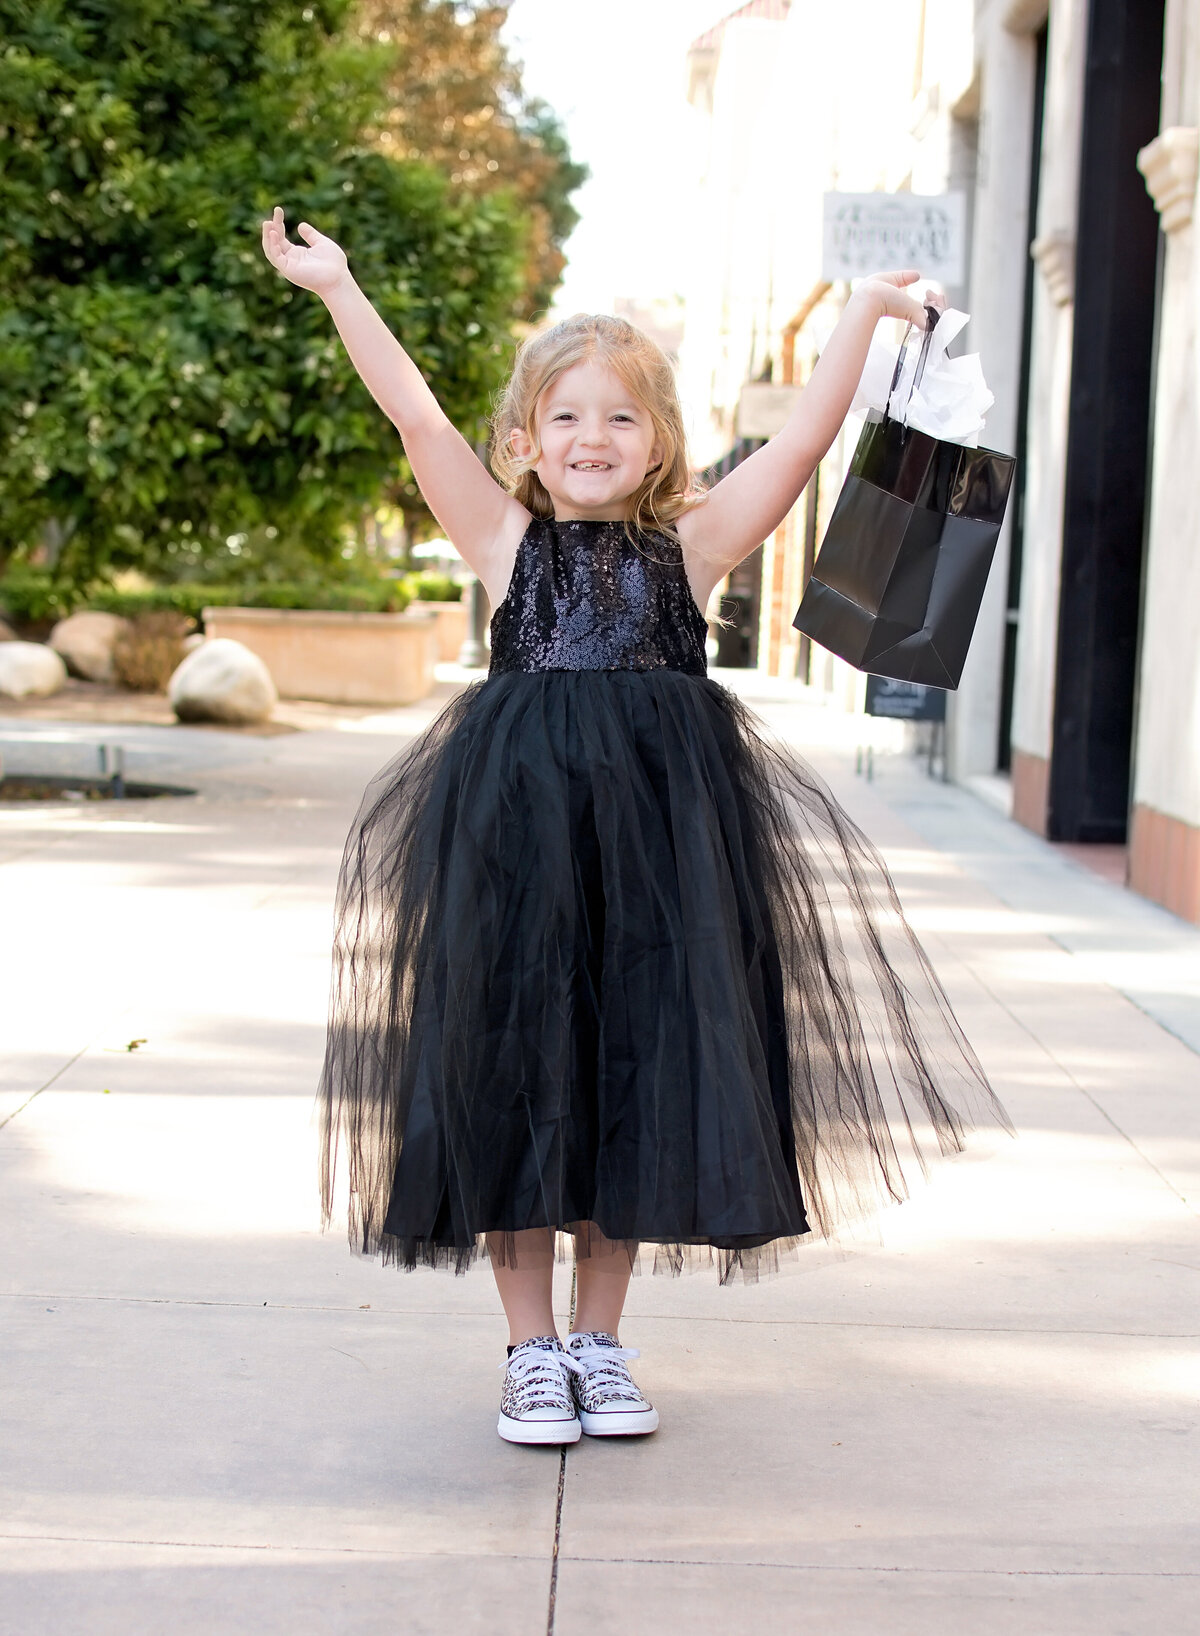 Lilttle girl in black dress holding black bag abover her head smiling